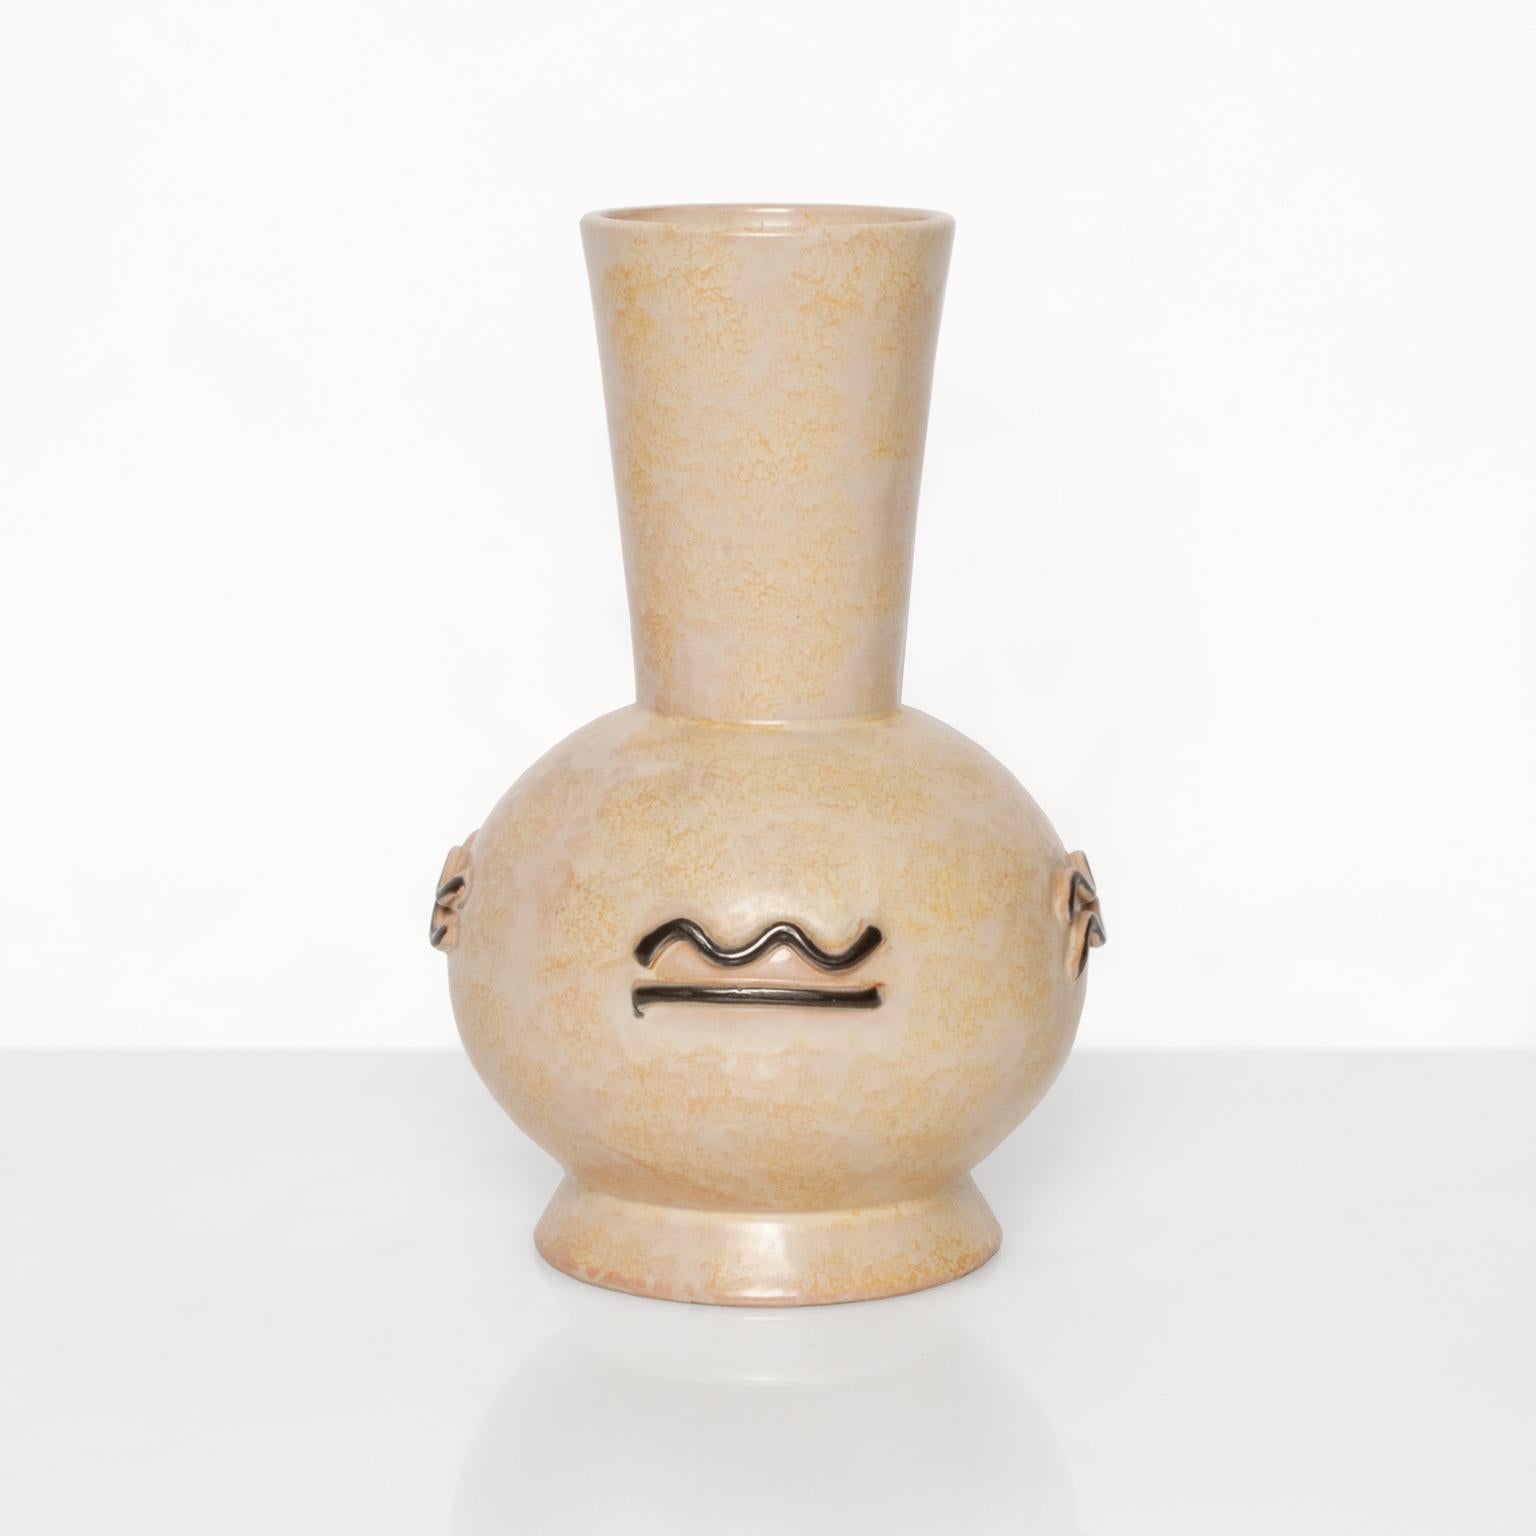 A Scandinavian Modern, Swedish art deco vase with a mottled glaze and raised decoration on all sides. Designed by sculpture Einar Luterkort for Upsala Ekeby,
 
Measures: Diameter 7